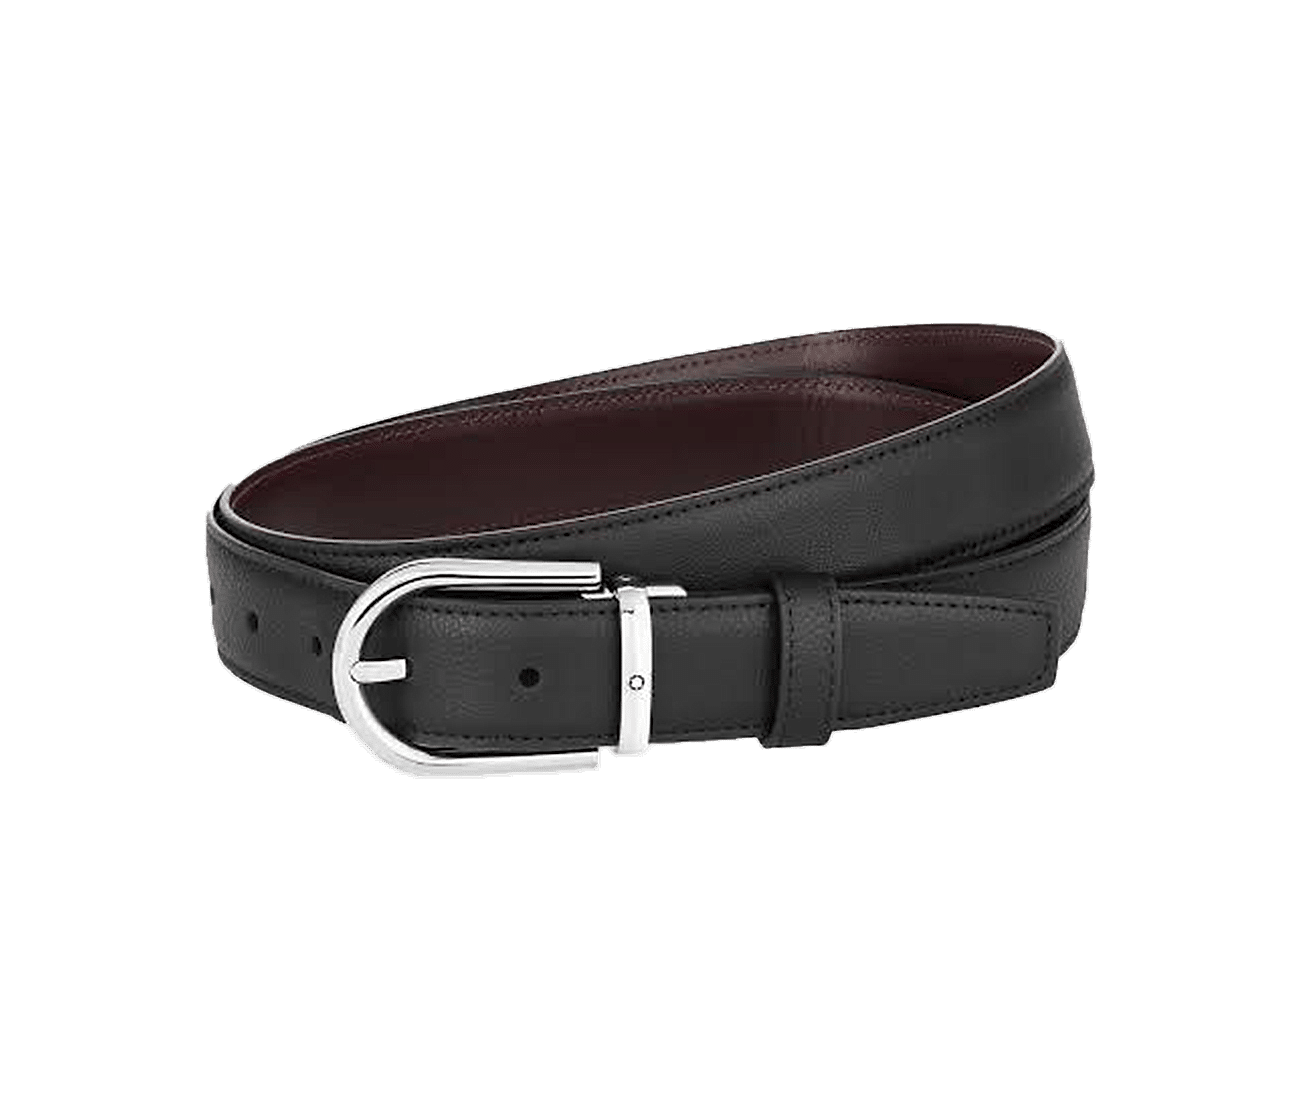 Horseshoe buckle black/burgundy 30 mm reversible leather belt